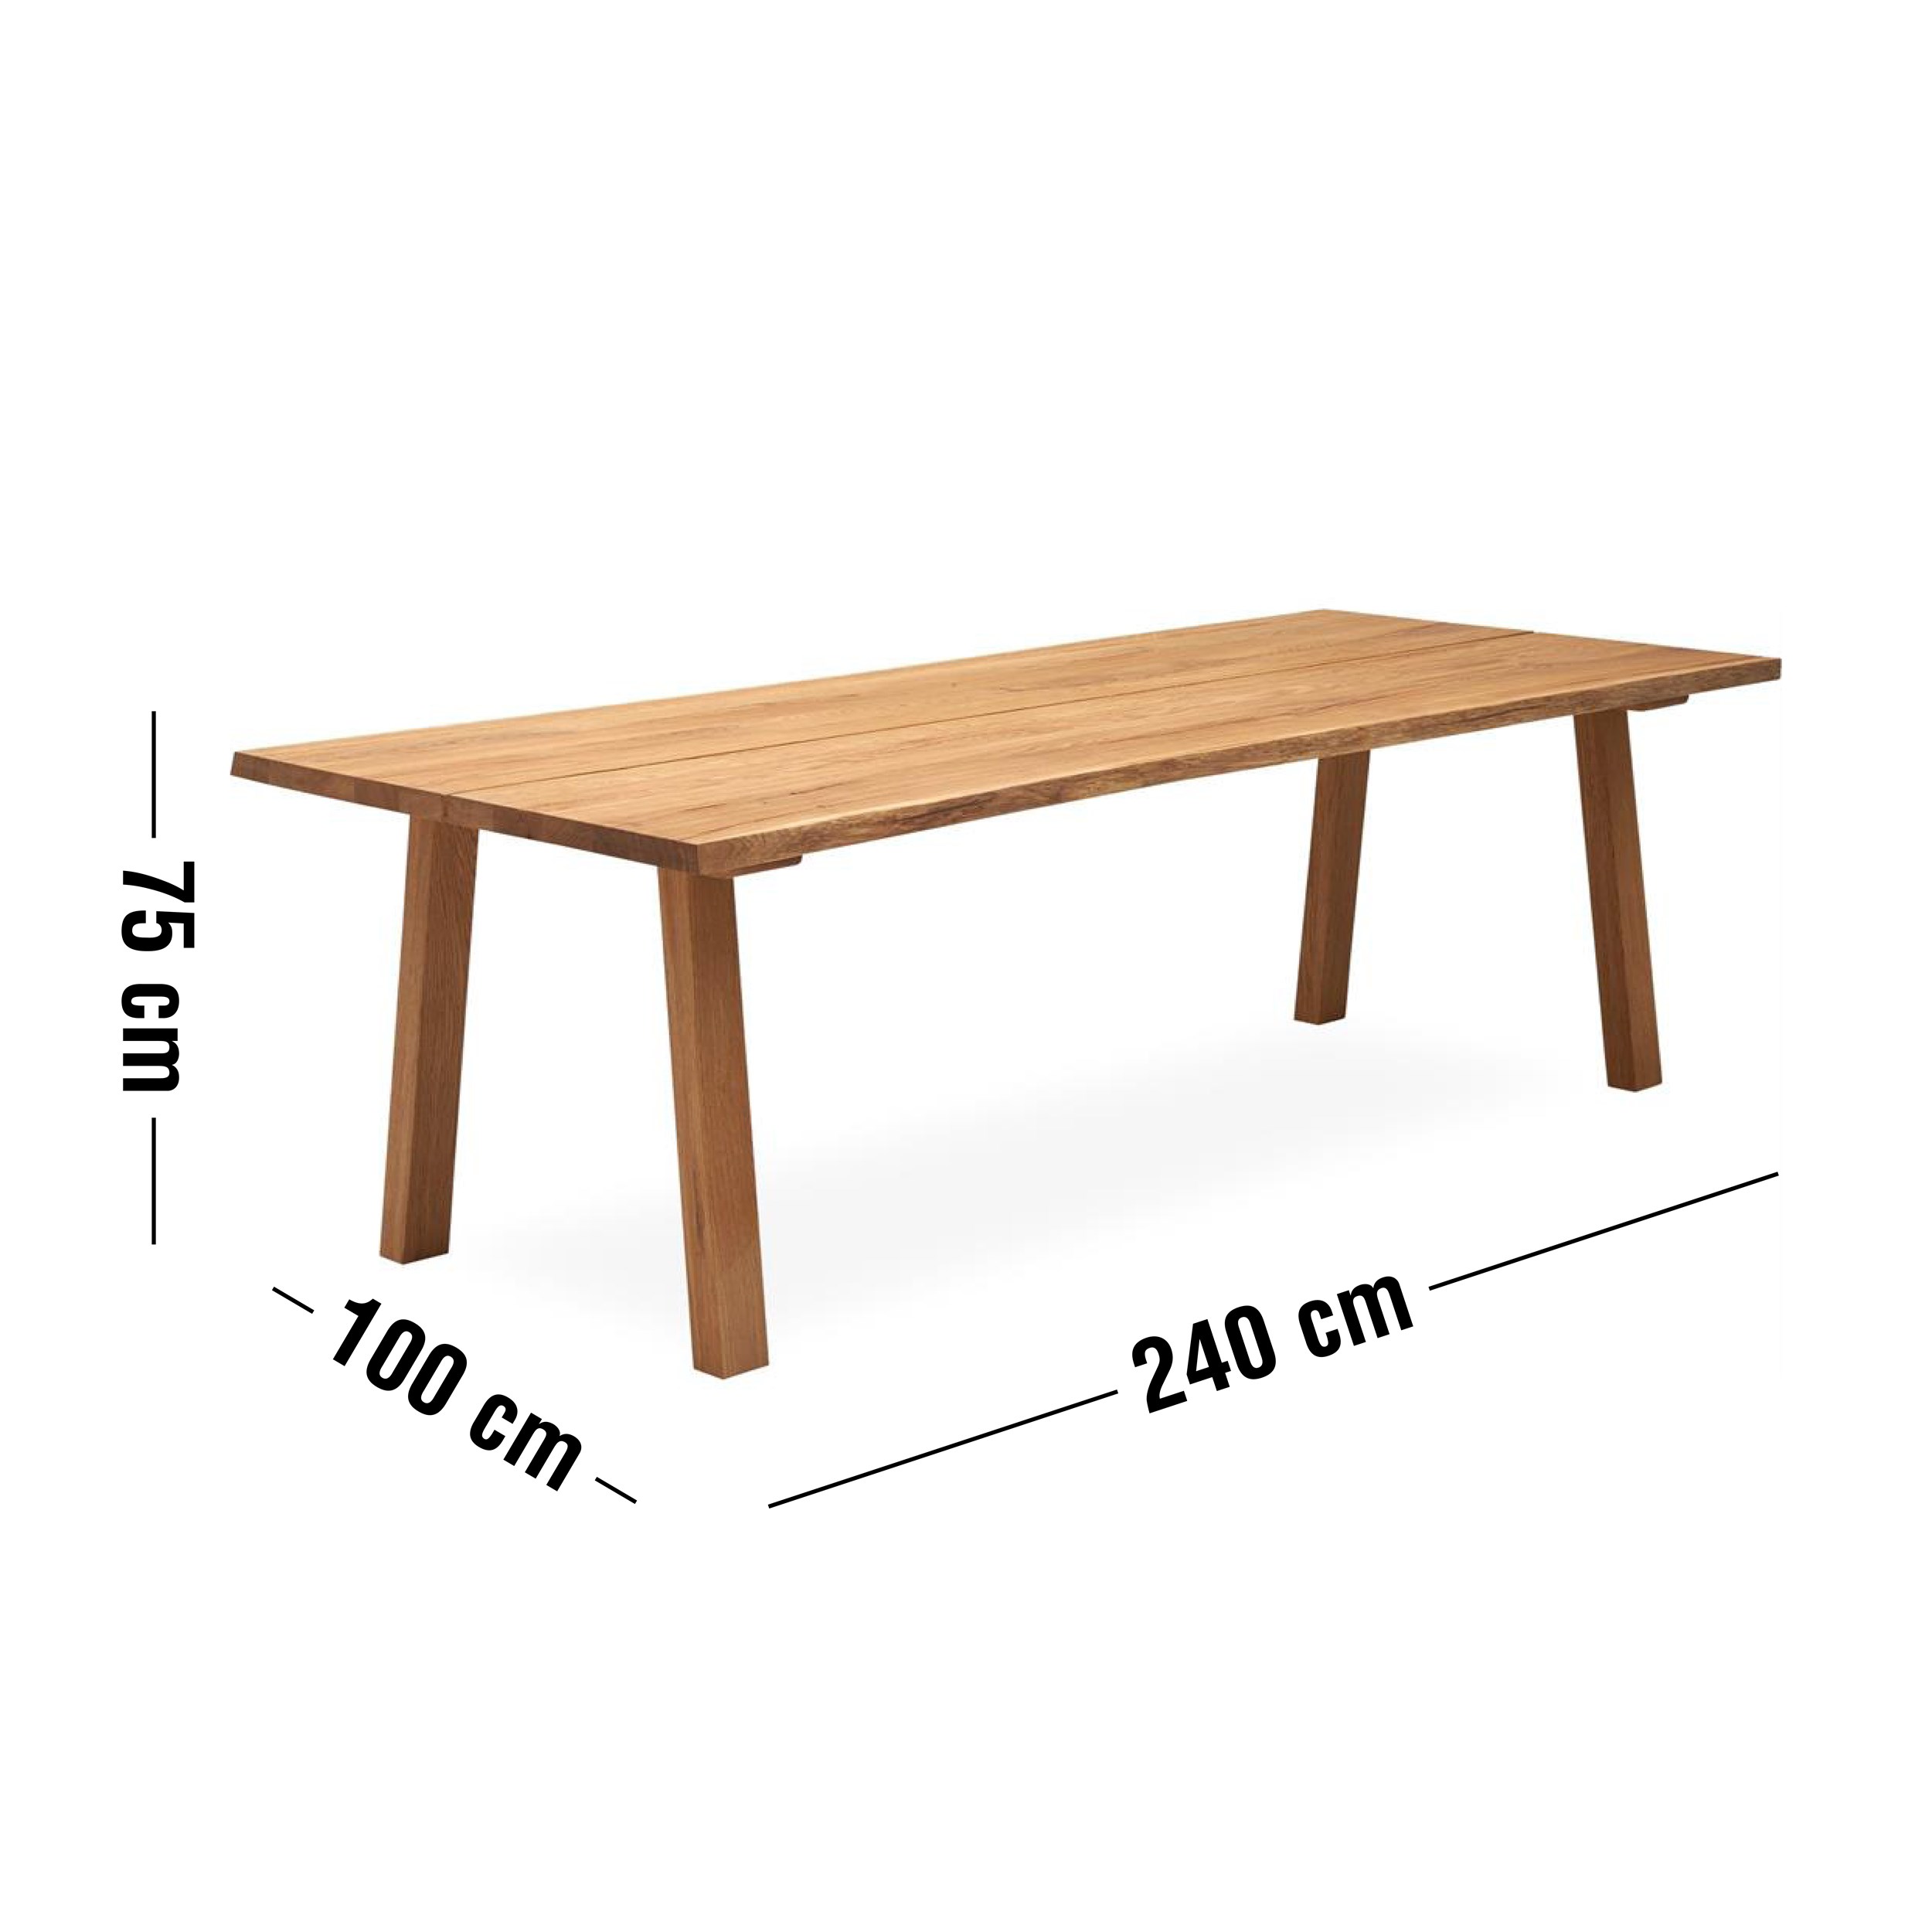 Timber 200 x 100 x 74 cm Spisebord 